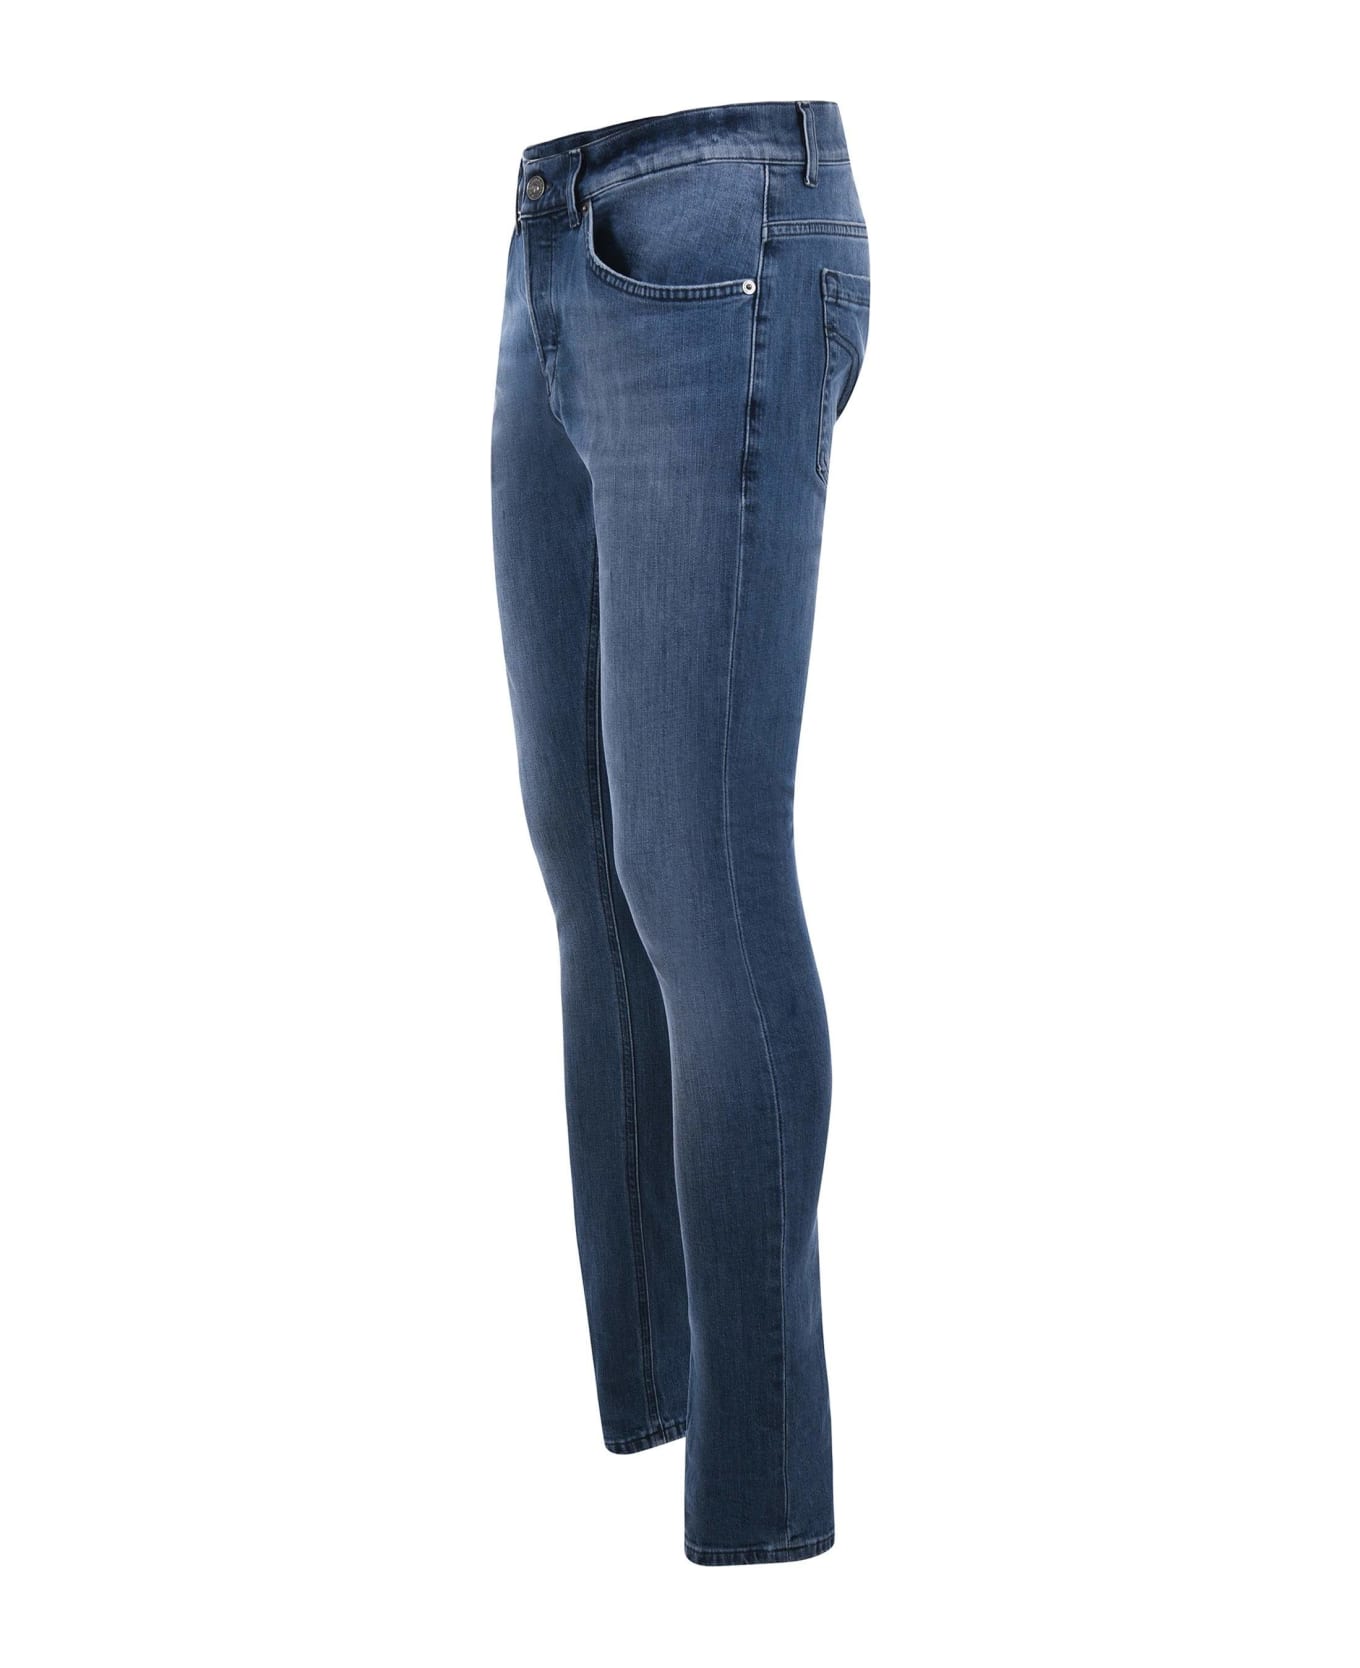 Dondup 'george' Jeans - BLUE デニム